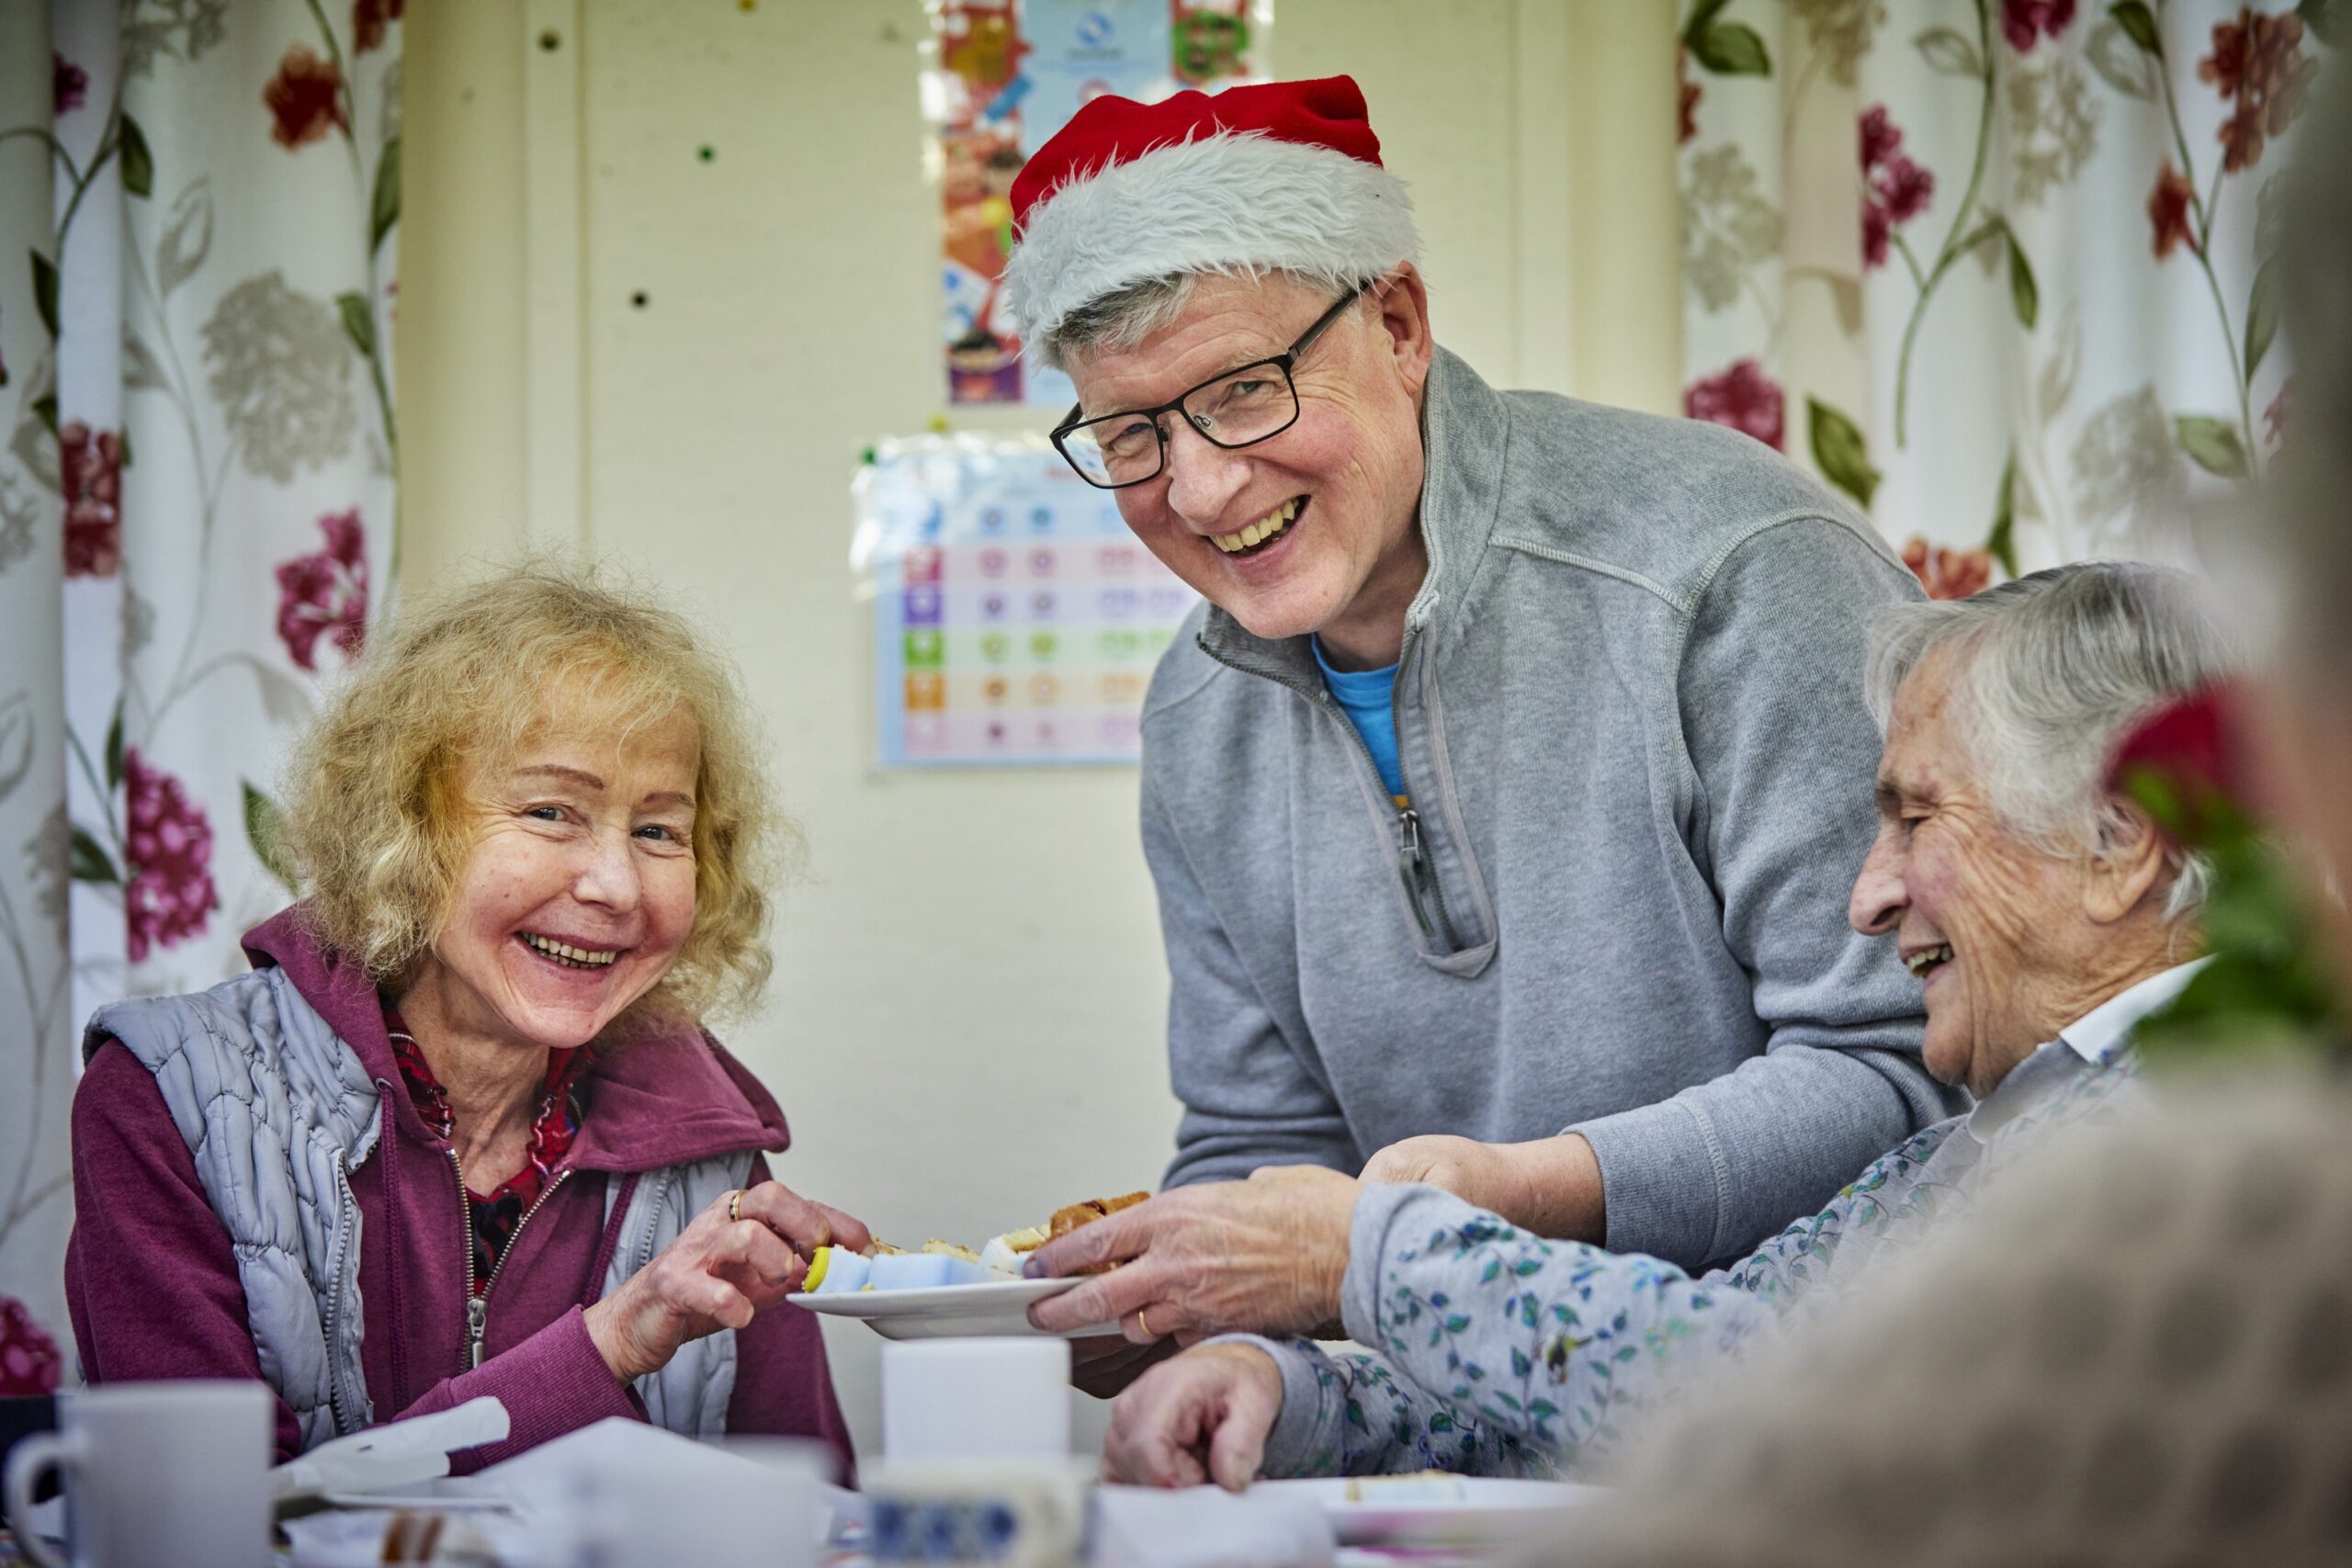 BARRATT HOMES GIVES £2,500 CHRISTMAS GIFT TO MERSEYSIDE BEFRIENDING CHARITY